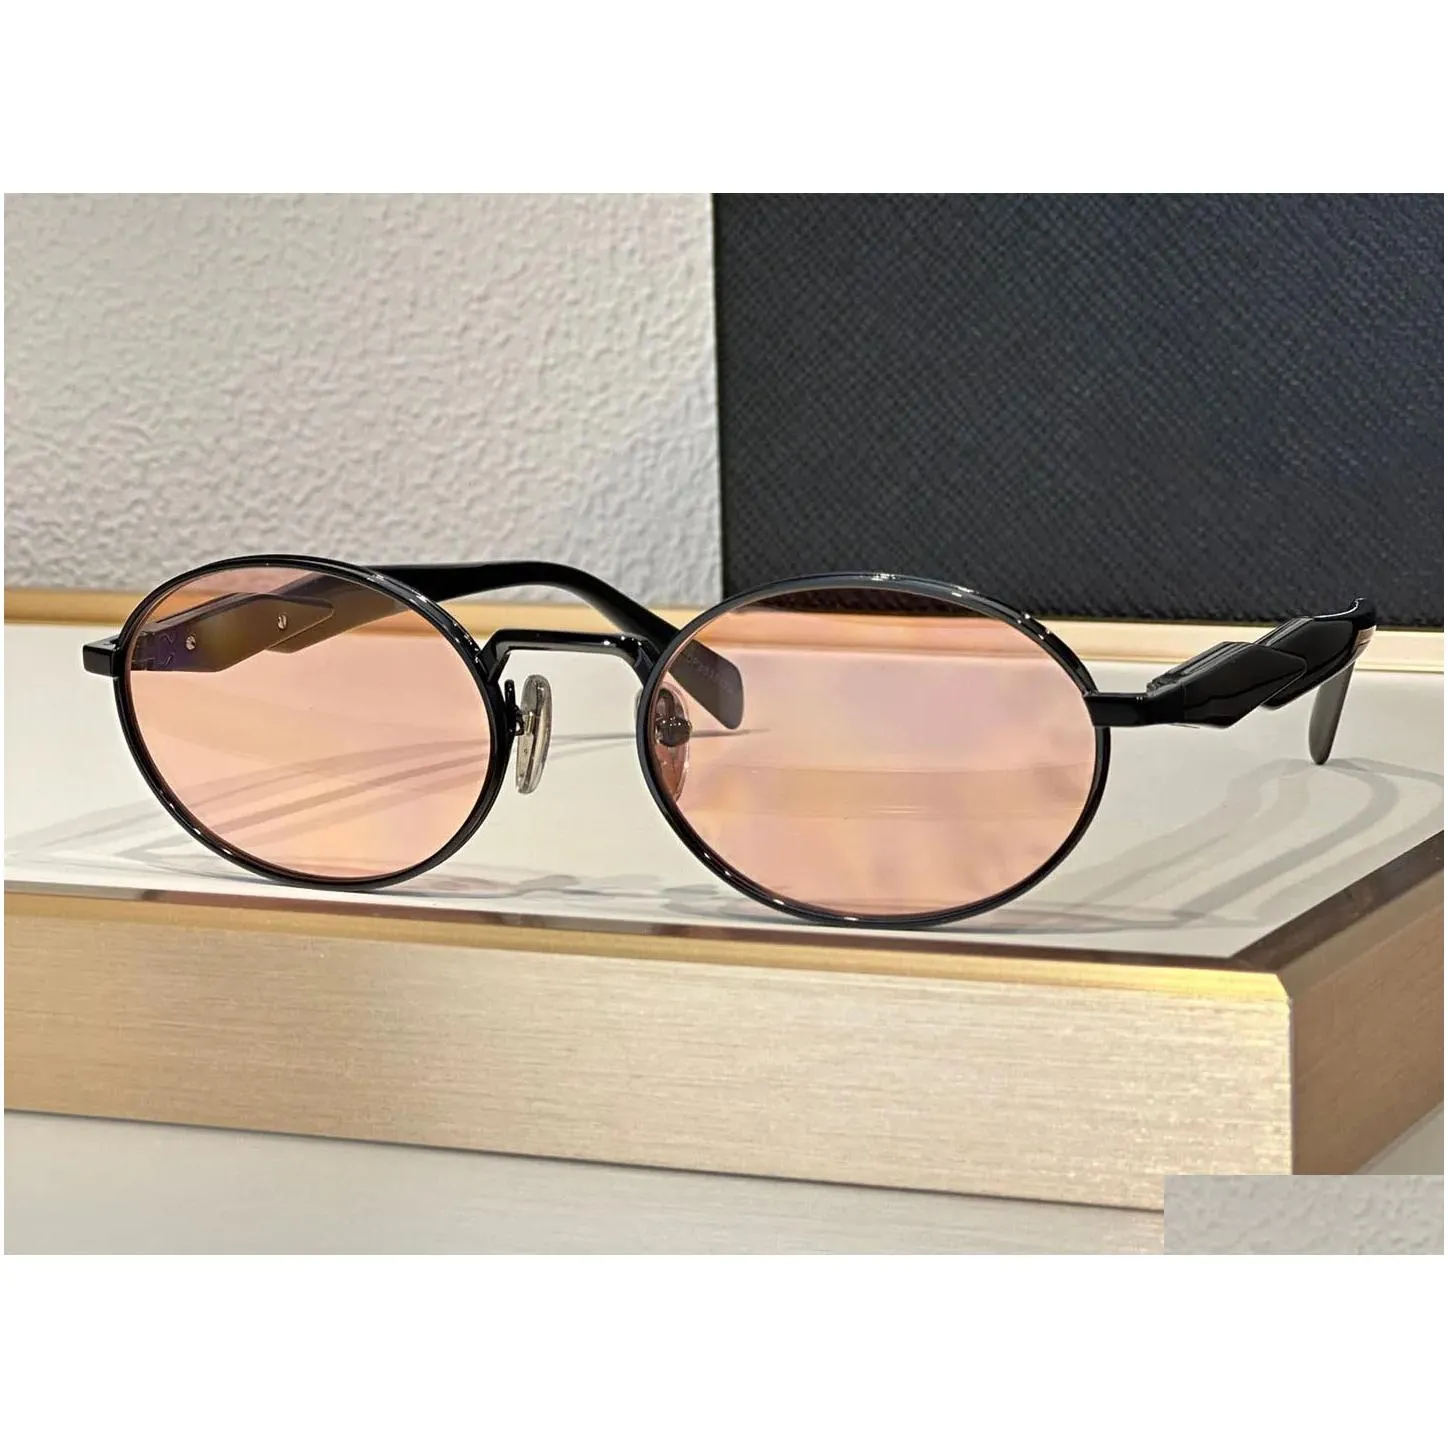 Fashion popular designer 65Z sunglasses for women vintage oval shape metal frame glasses summer elegant trendy style Anti-Ultraviolet come with